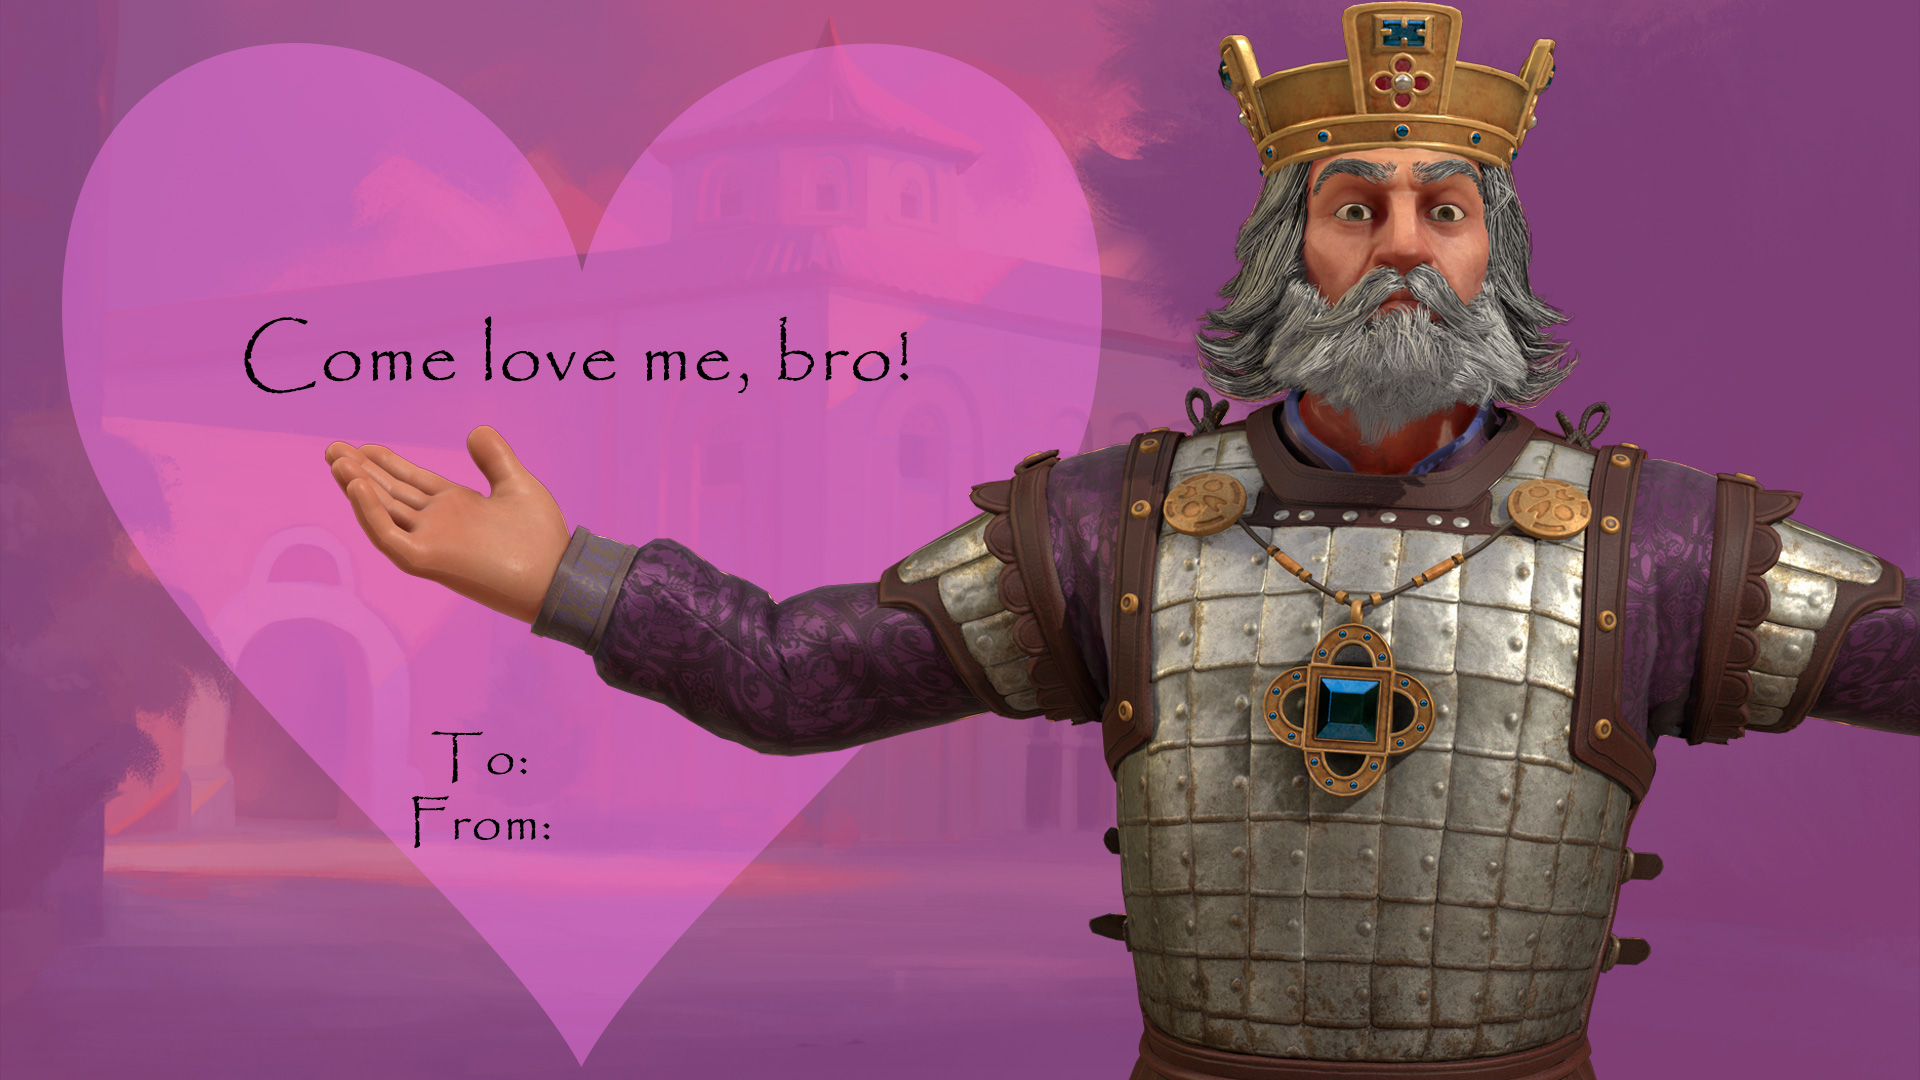 Basil II: Come love me, bro!